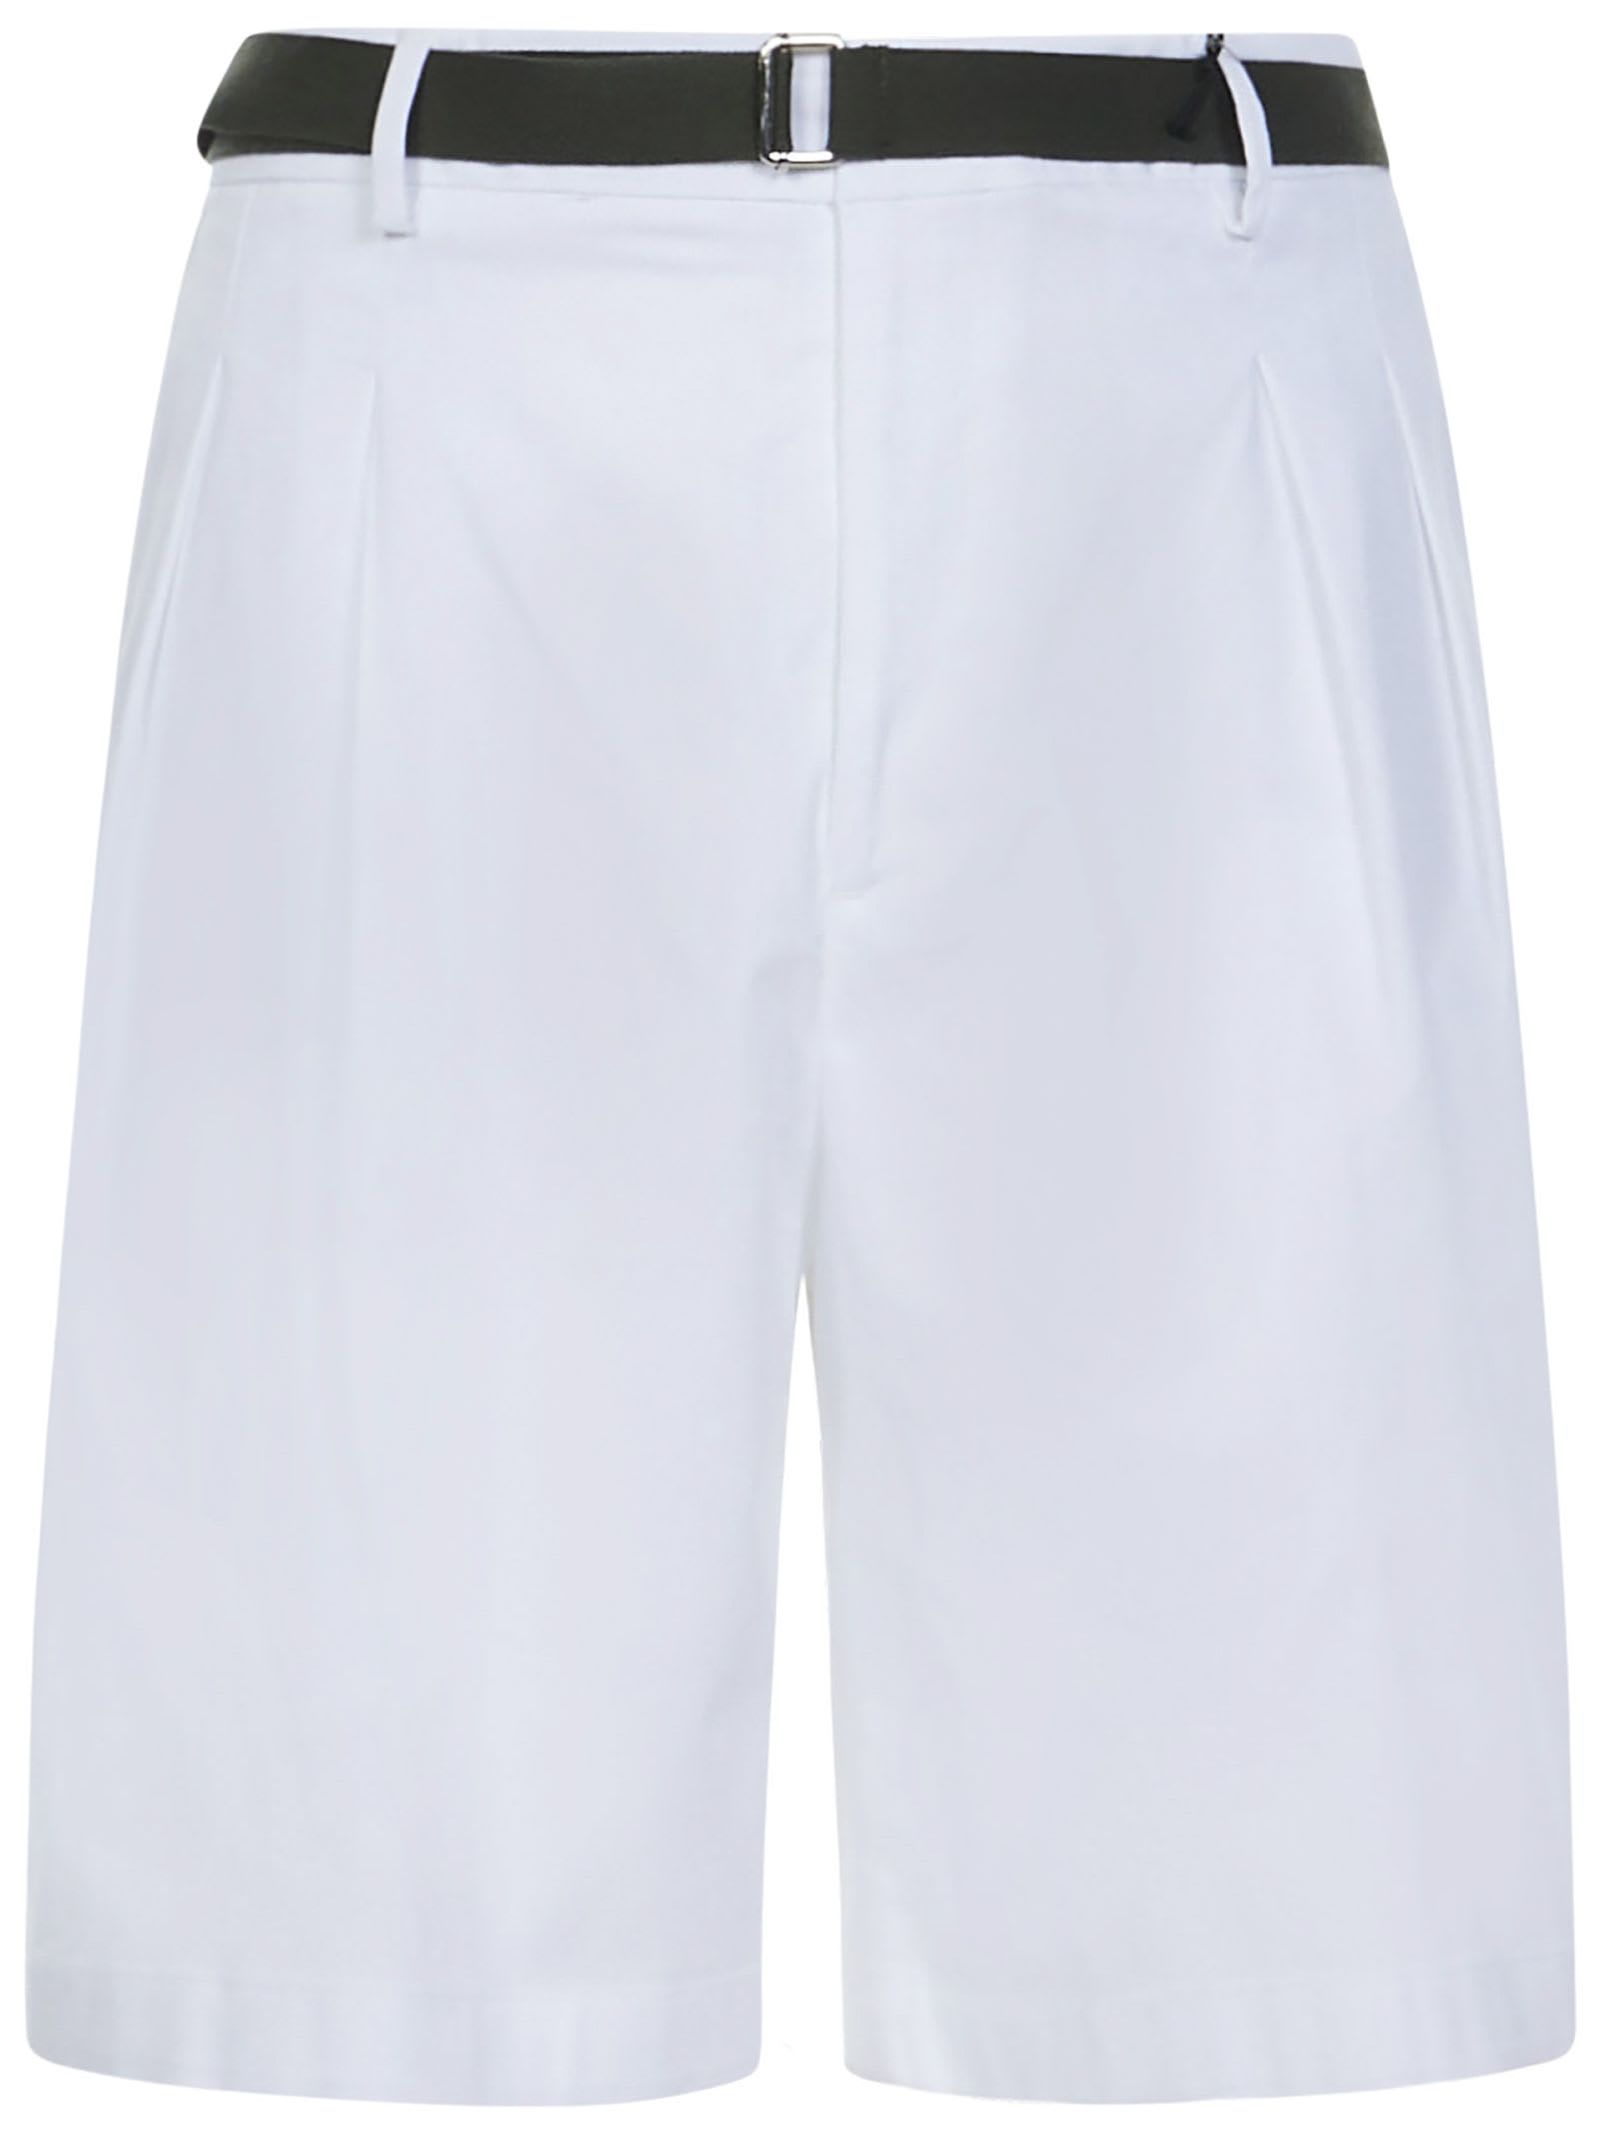 Low Brand White Cotton Bermuda Shorts